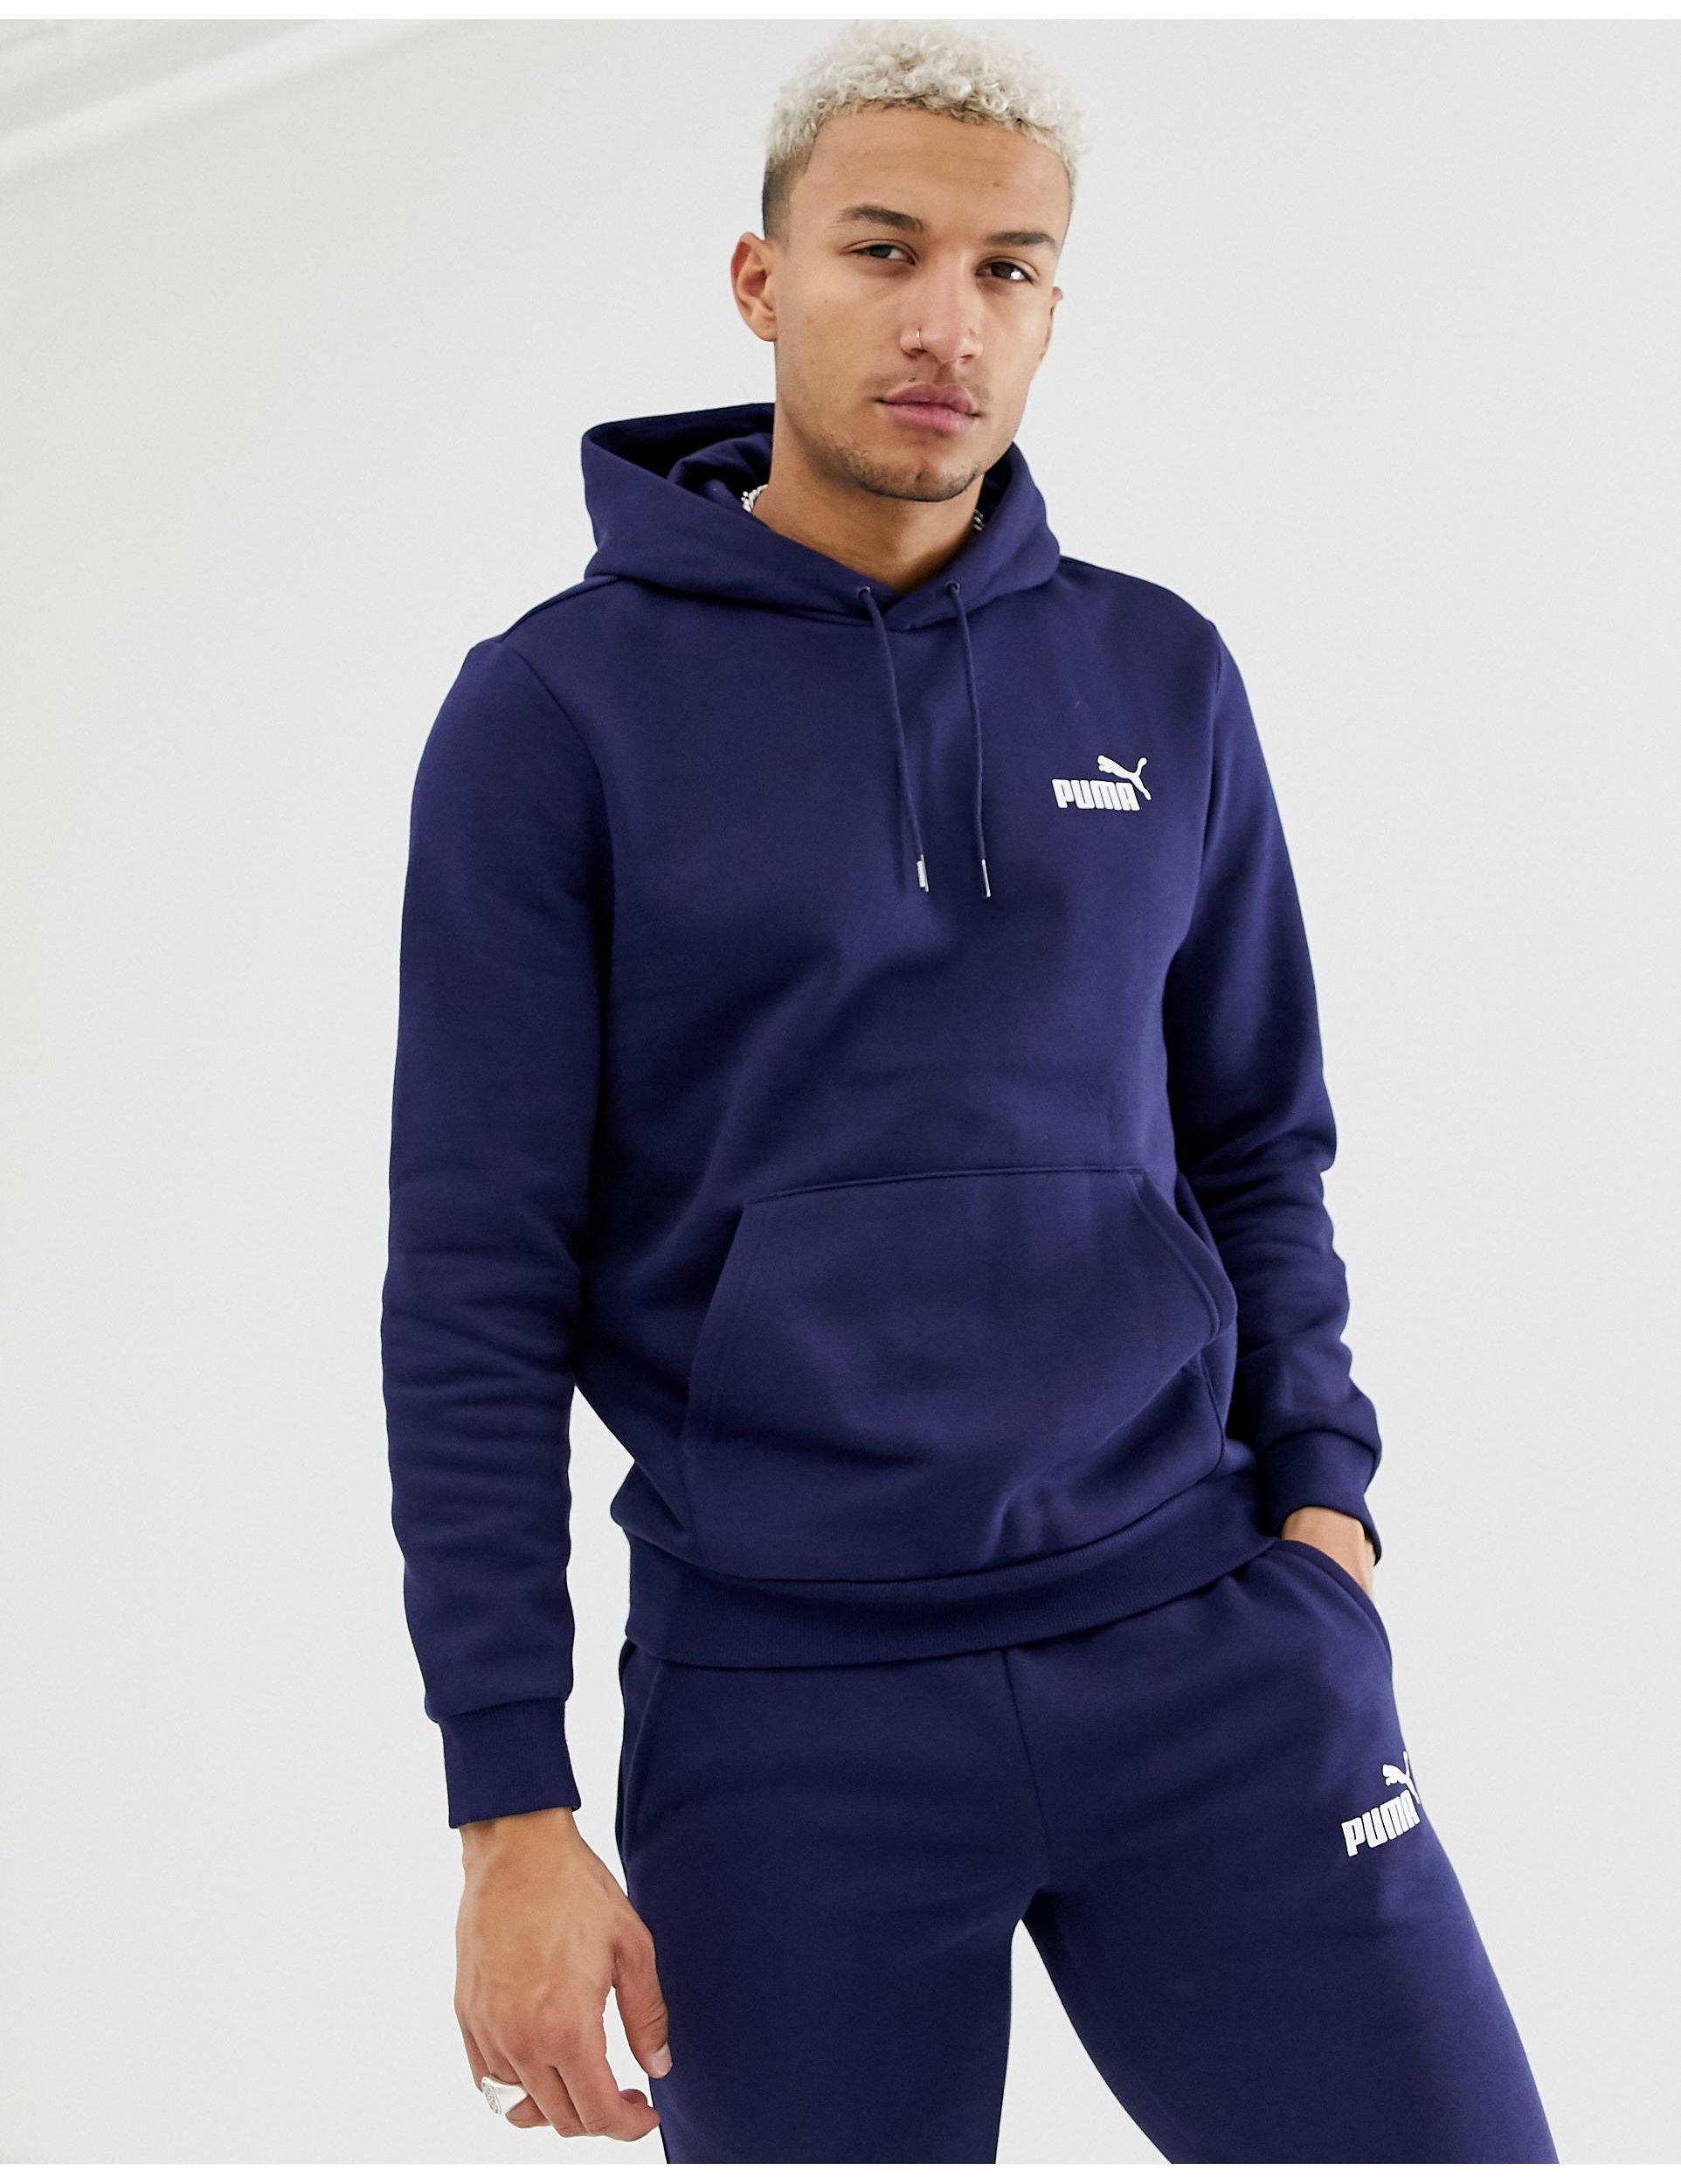 puma navy blue hoodie